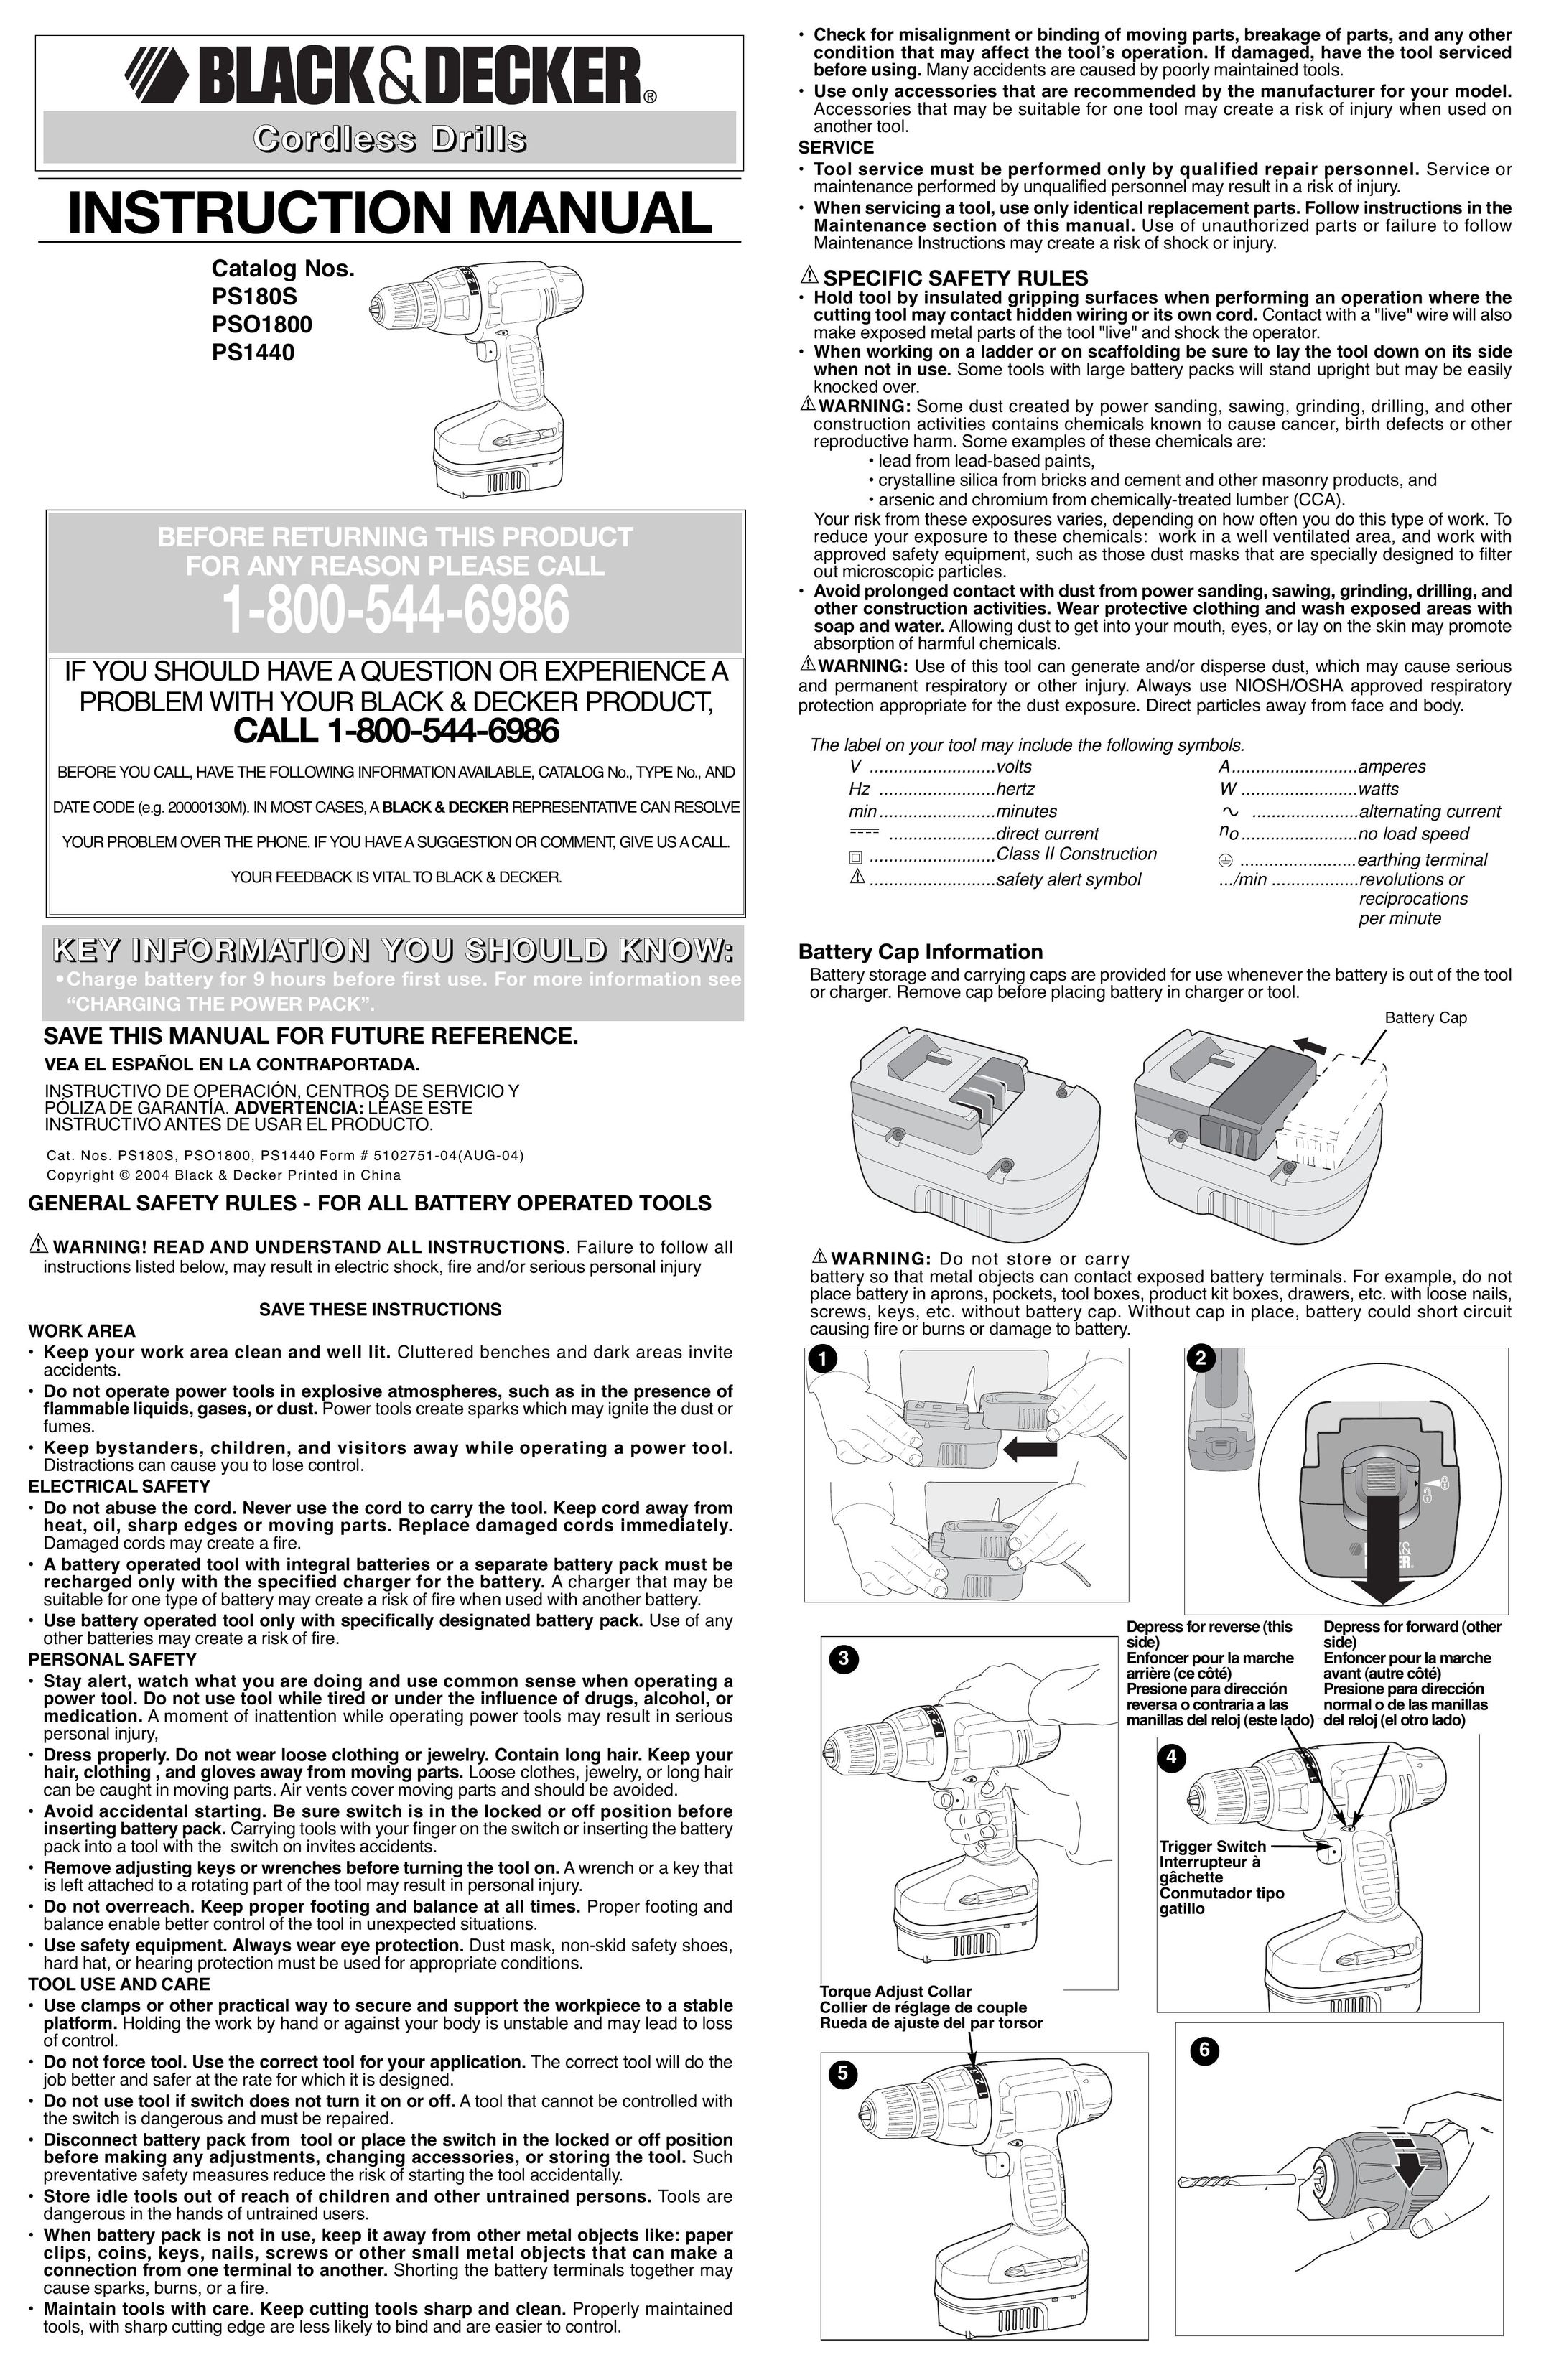 Black & Decker 5102751-04 Cordless Drill User Manual